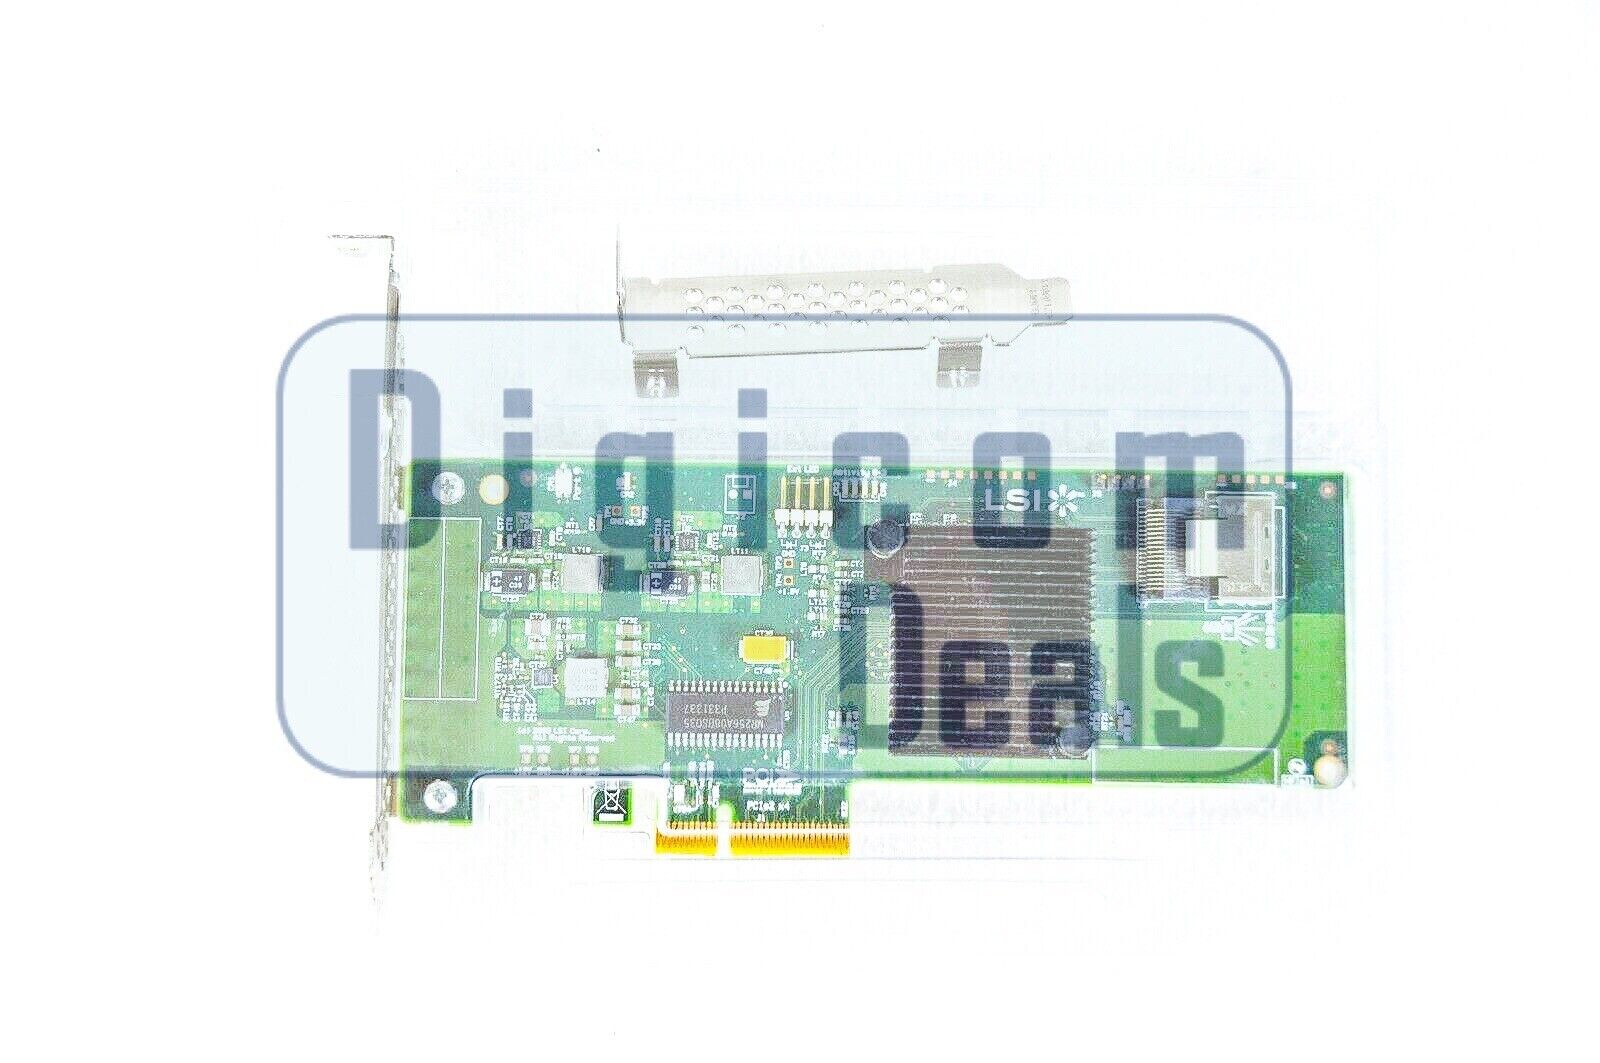 LSI00190 SAS9211-4i 4-Port PCI-E SAS/SATA Controller HBA w/ Both Brackets